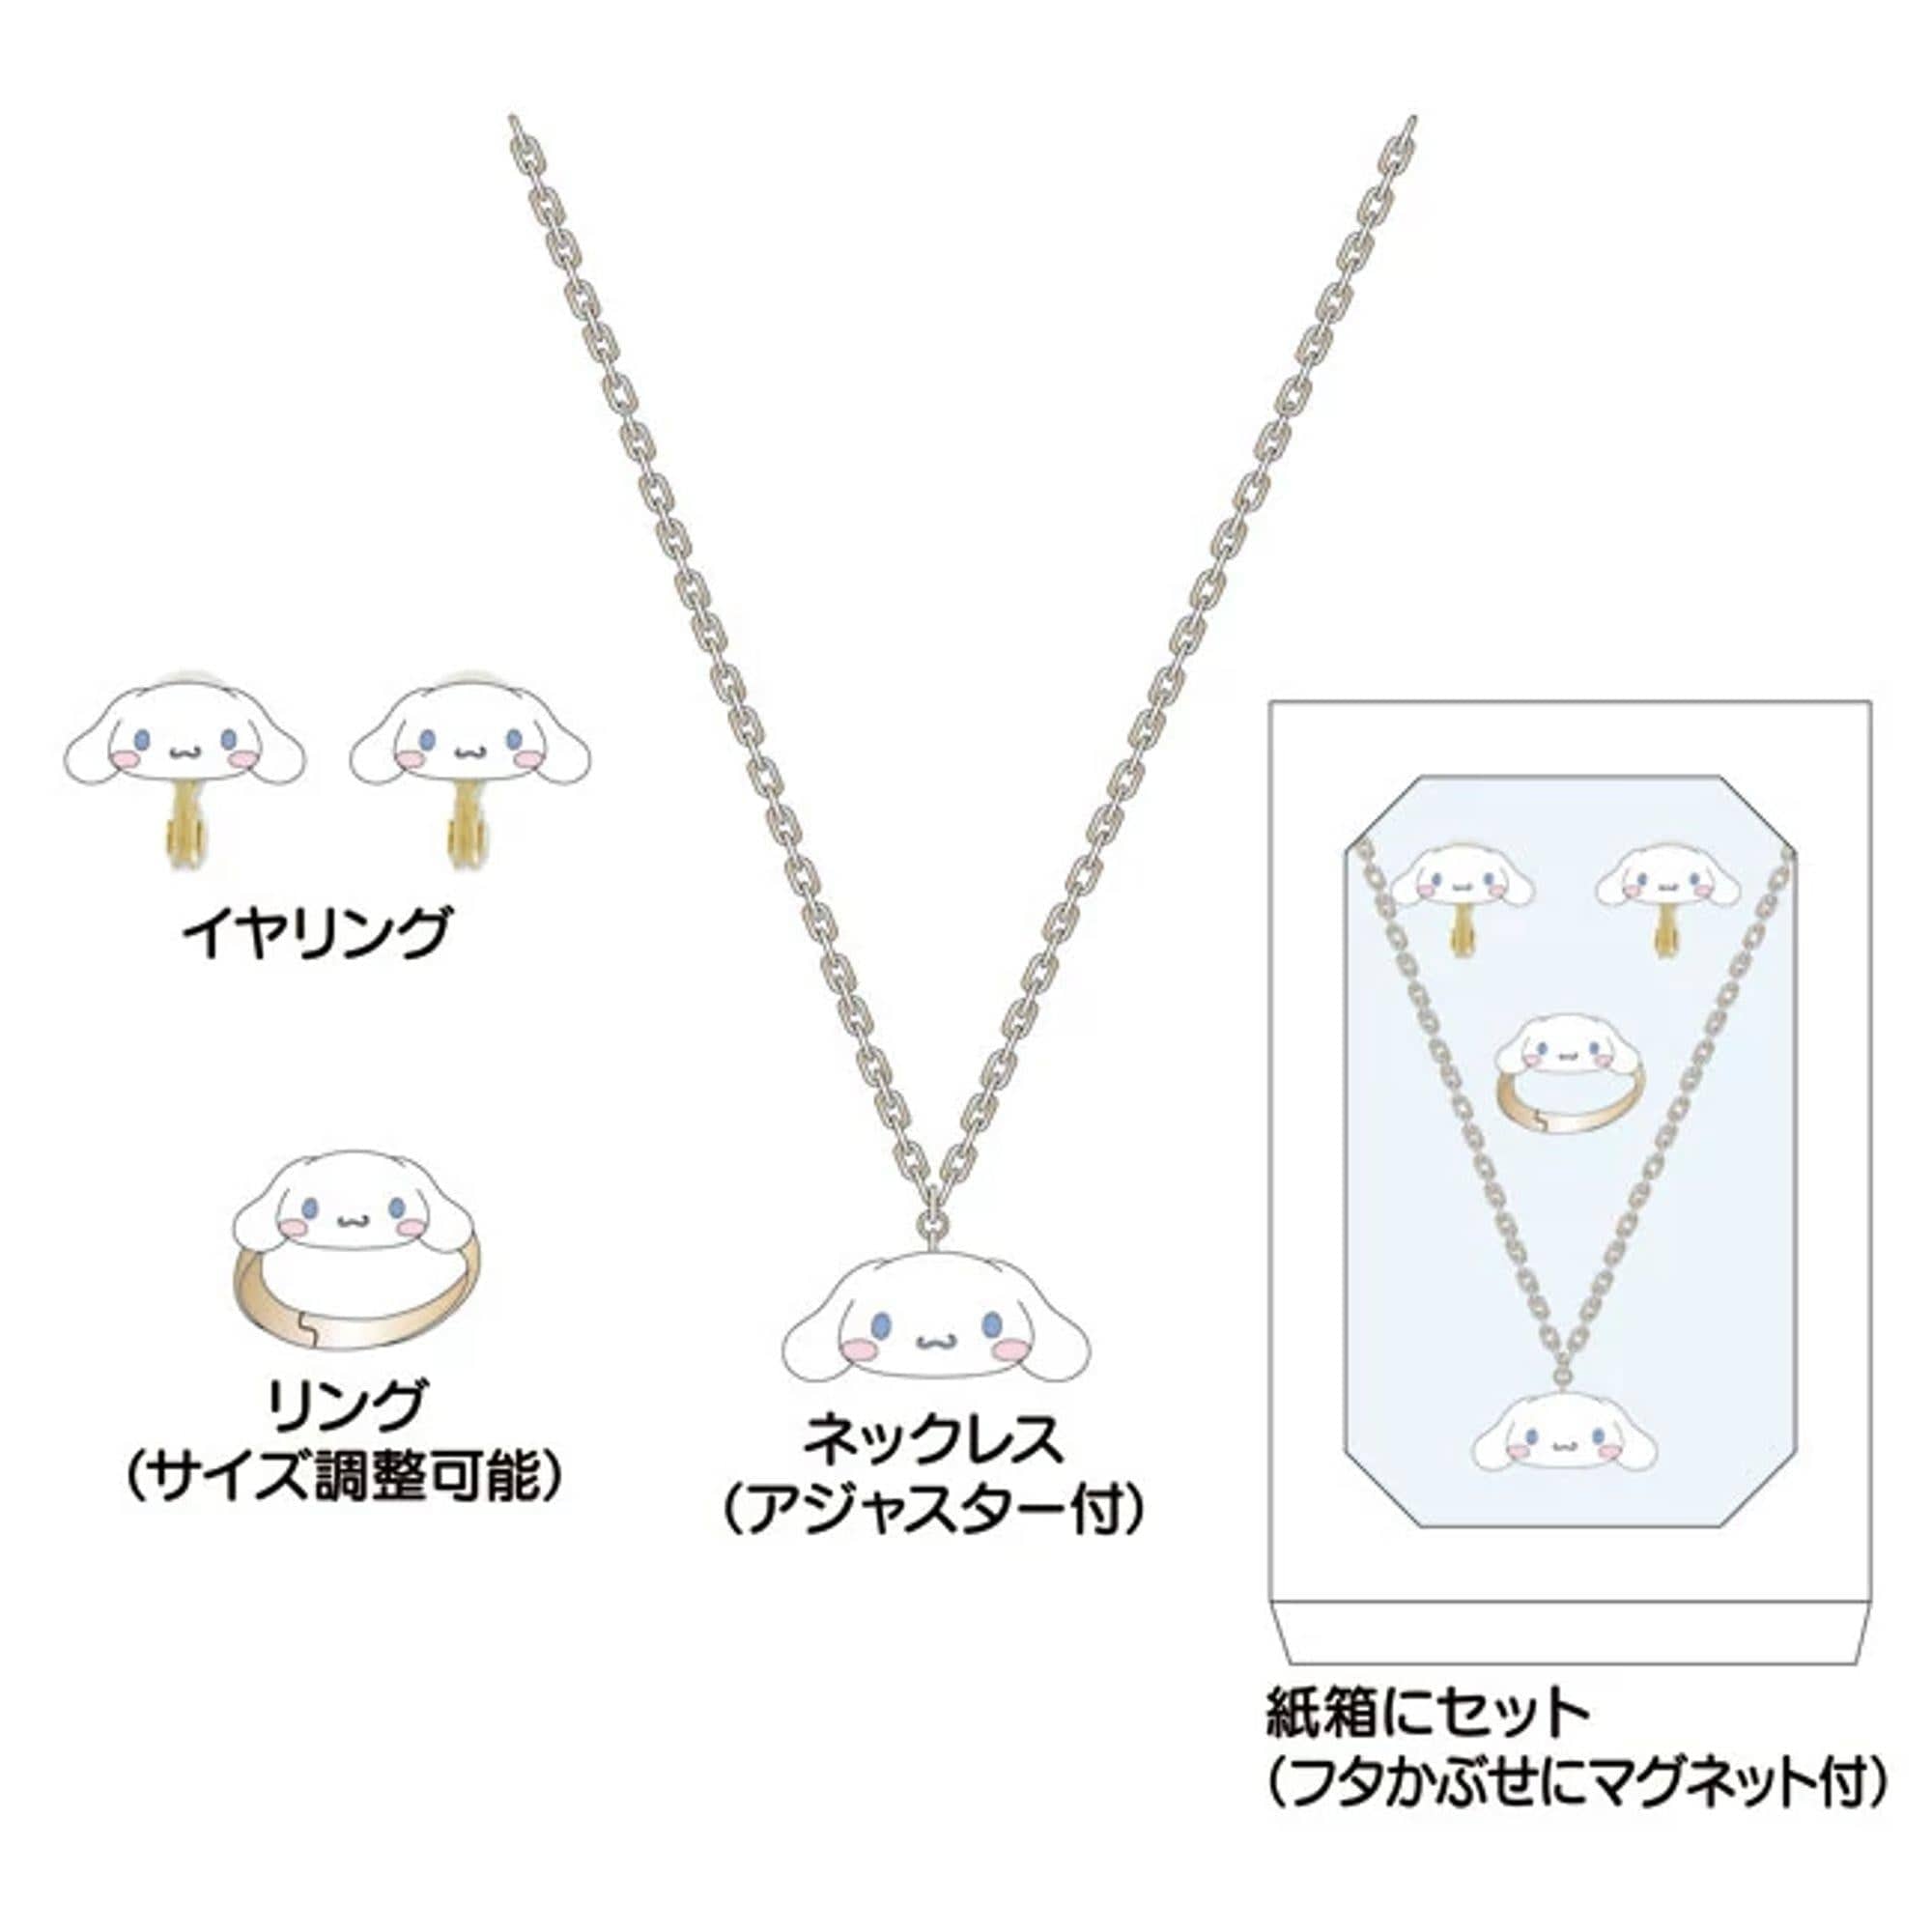 Enesco Sanrio Friends Jewelry Sets: Necklace, Earrings, Ring Cinnamoroll Kawaii Gifts 4550337377604